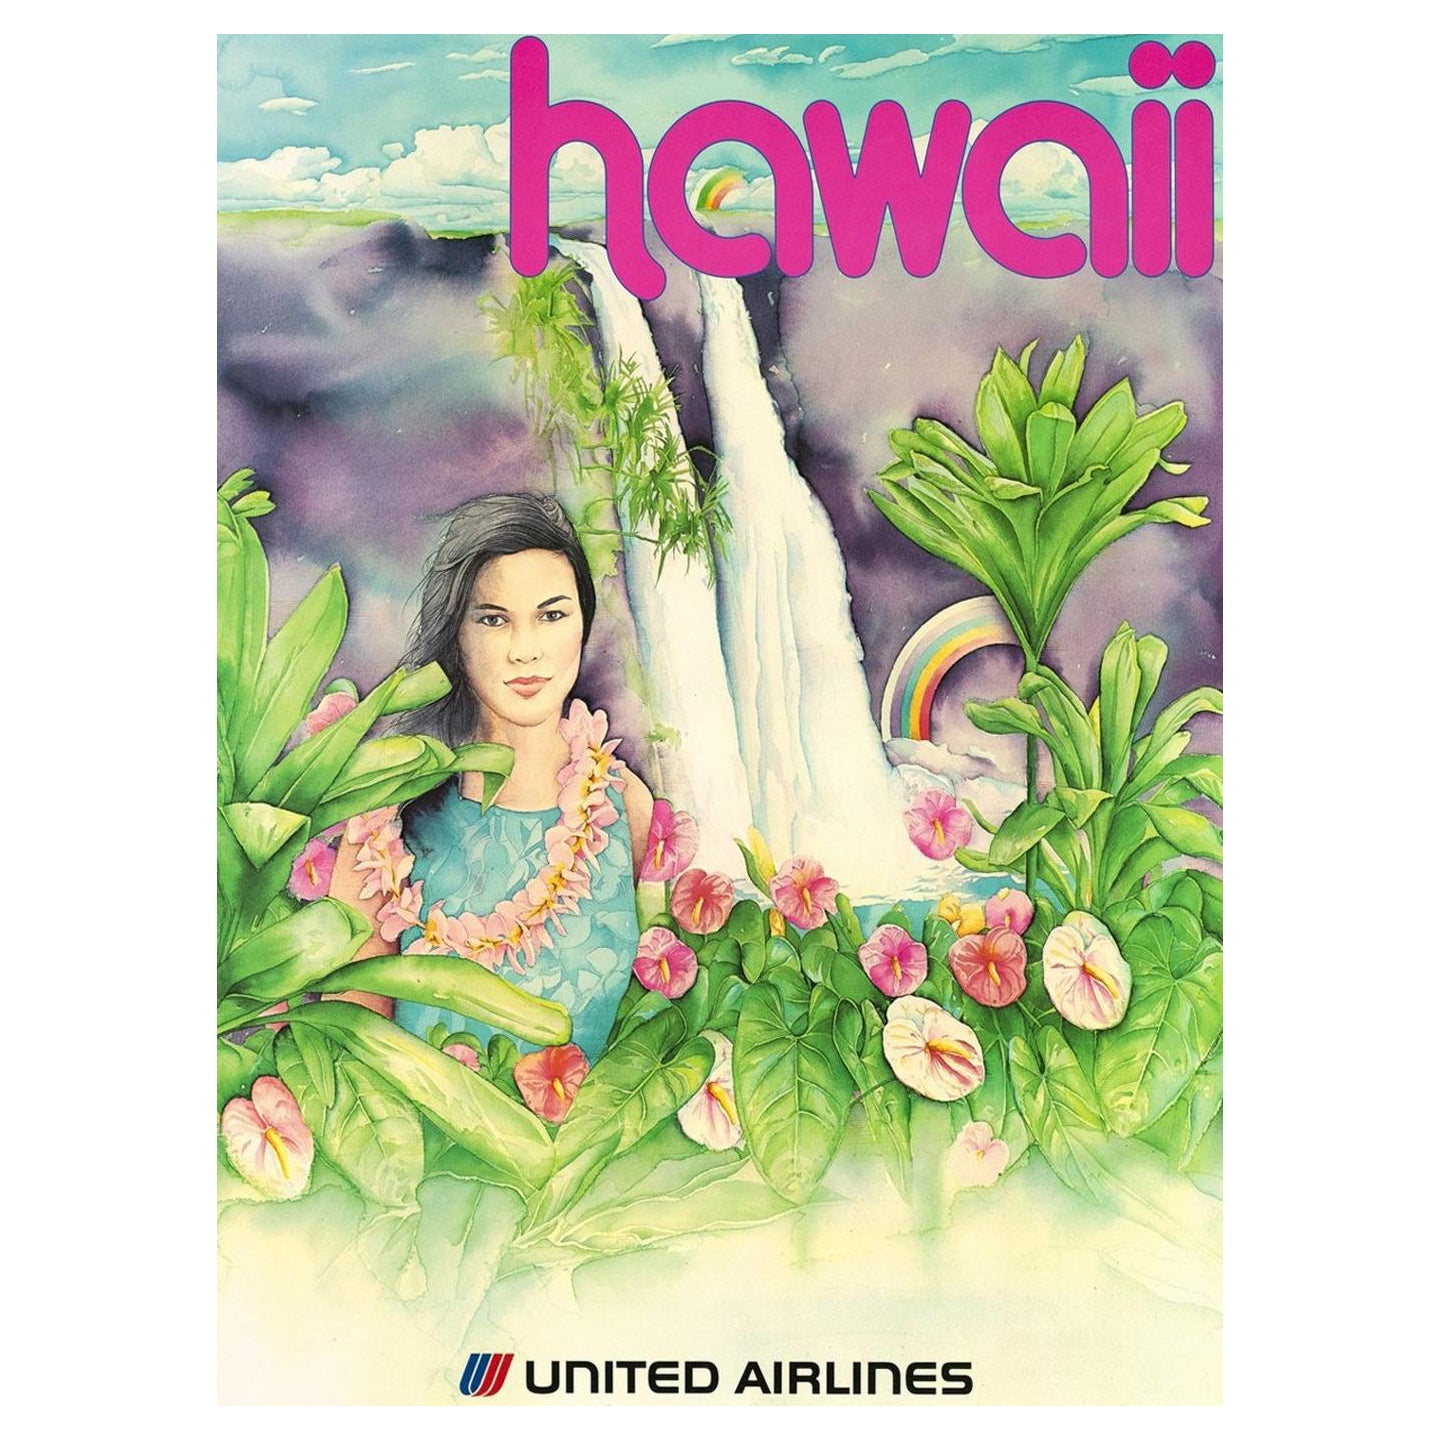 1970 United Airlines - Hawaii Original Vintage Poster